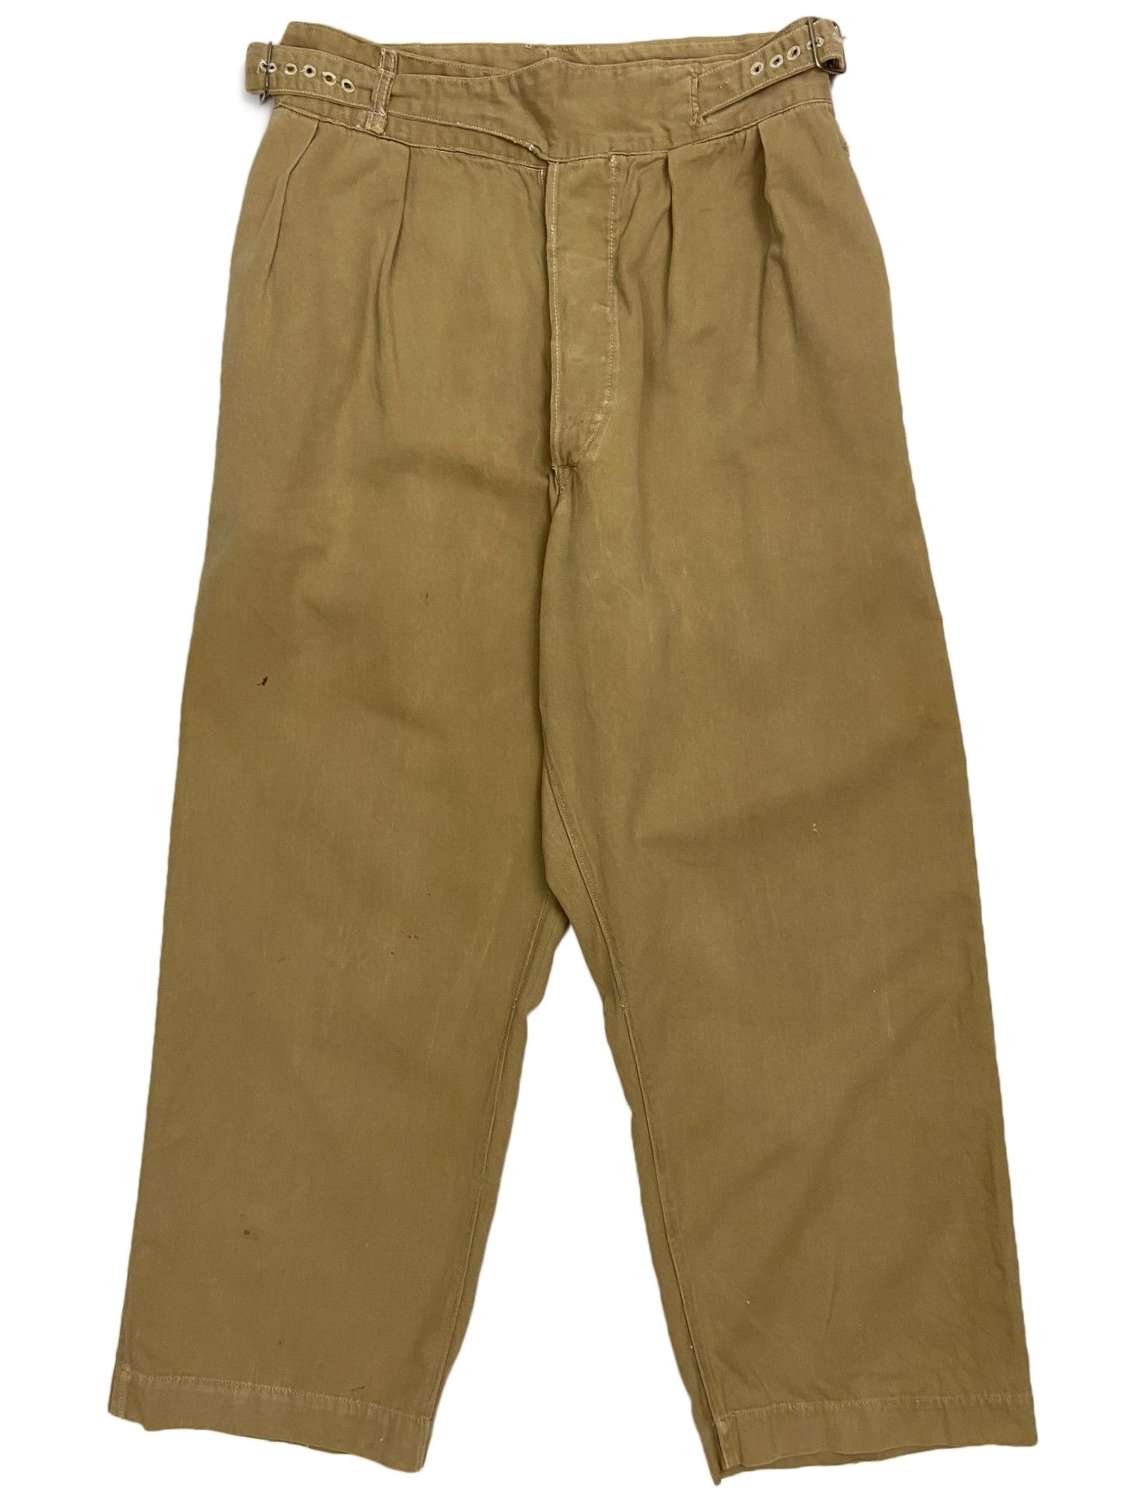 Original late WW2 British Army Khaki Drill Trousers